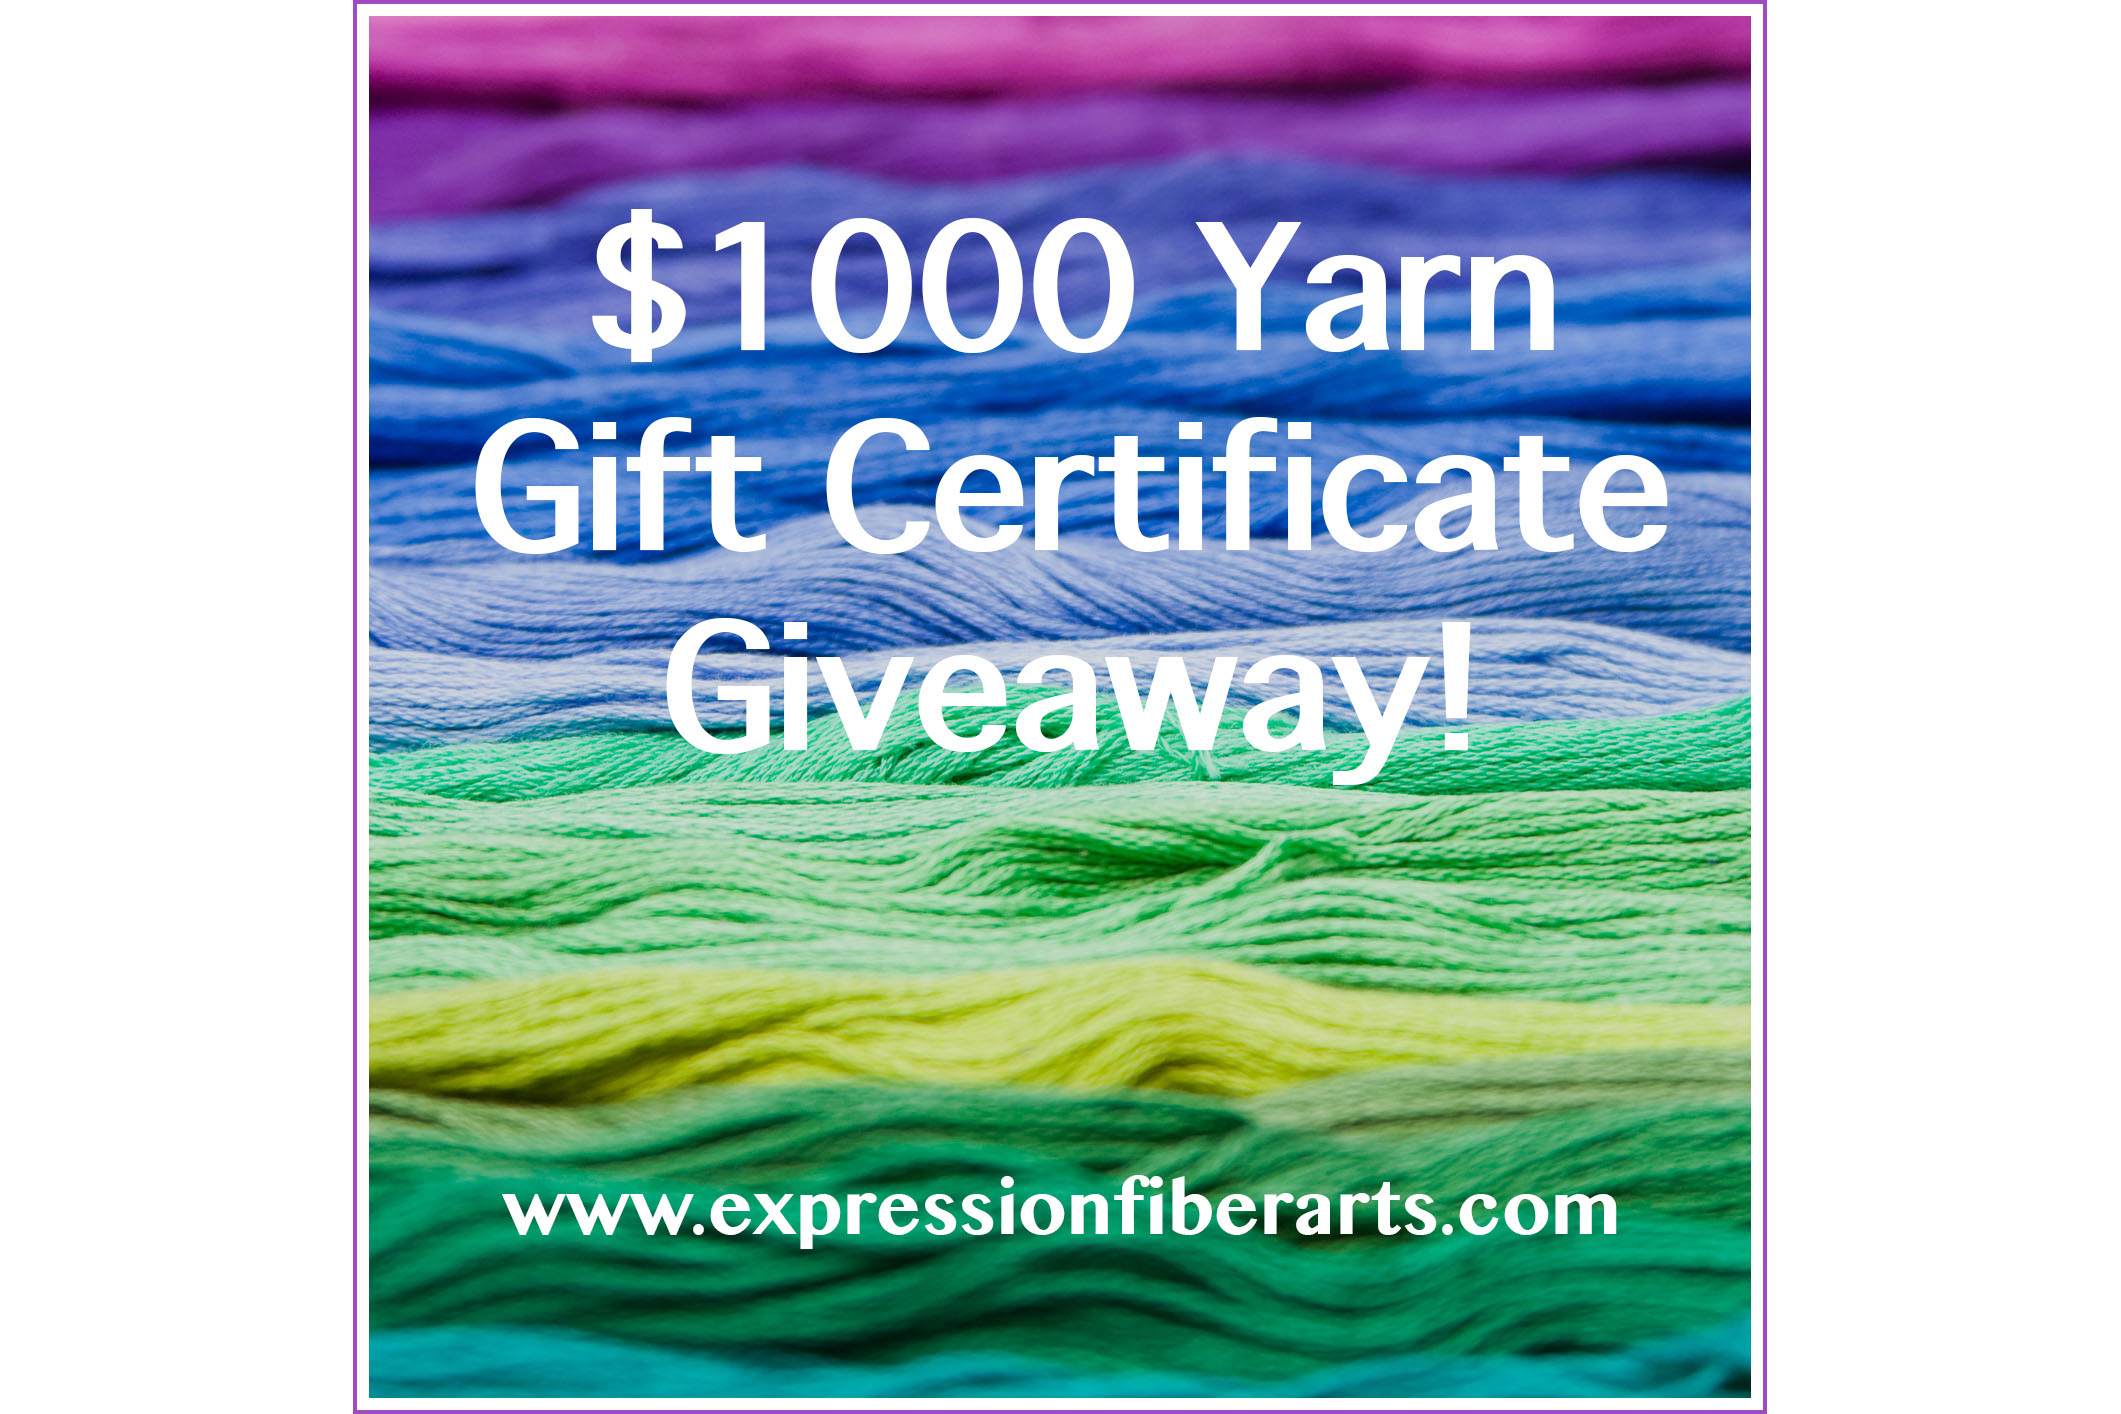 $1000 Yarn Gift Certificate Giveaway!